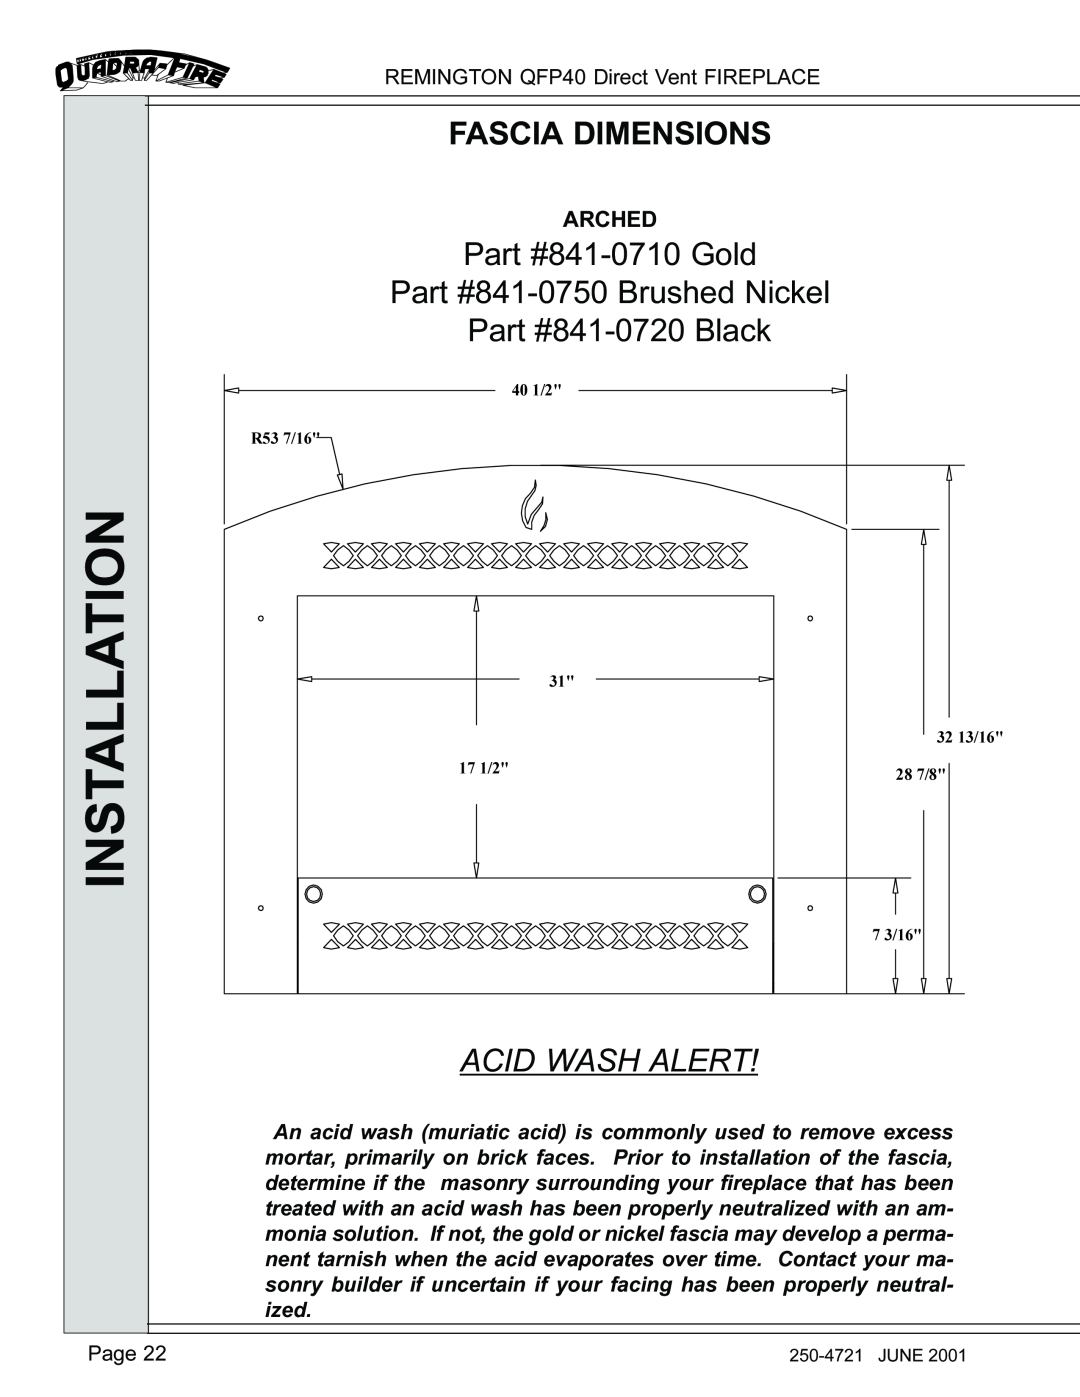 Remington QFP40 manual Fascia Dimensions, 841-0710Gold 841-0750Brushed Nickel, 841-0720Black, Acid Wash Alert, Arched 